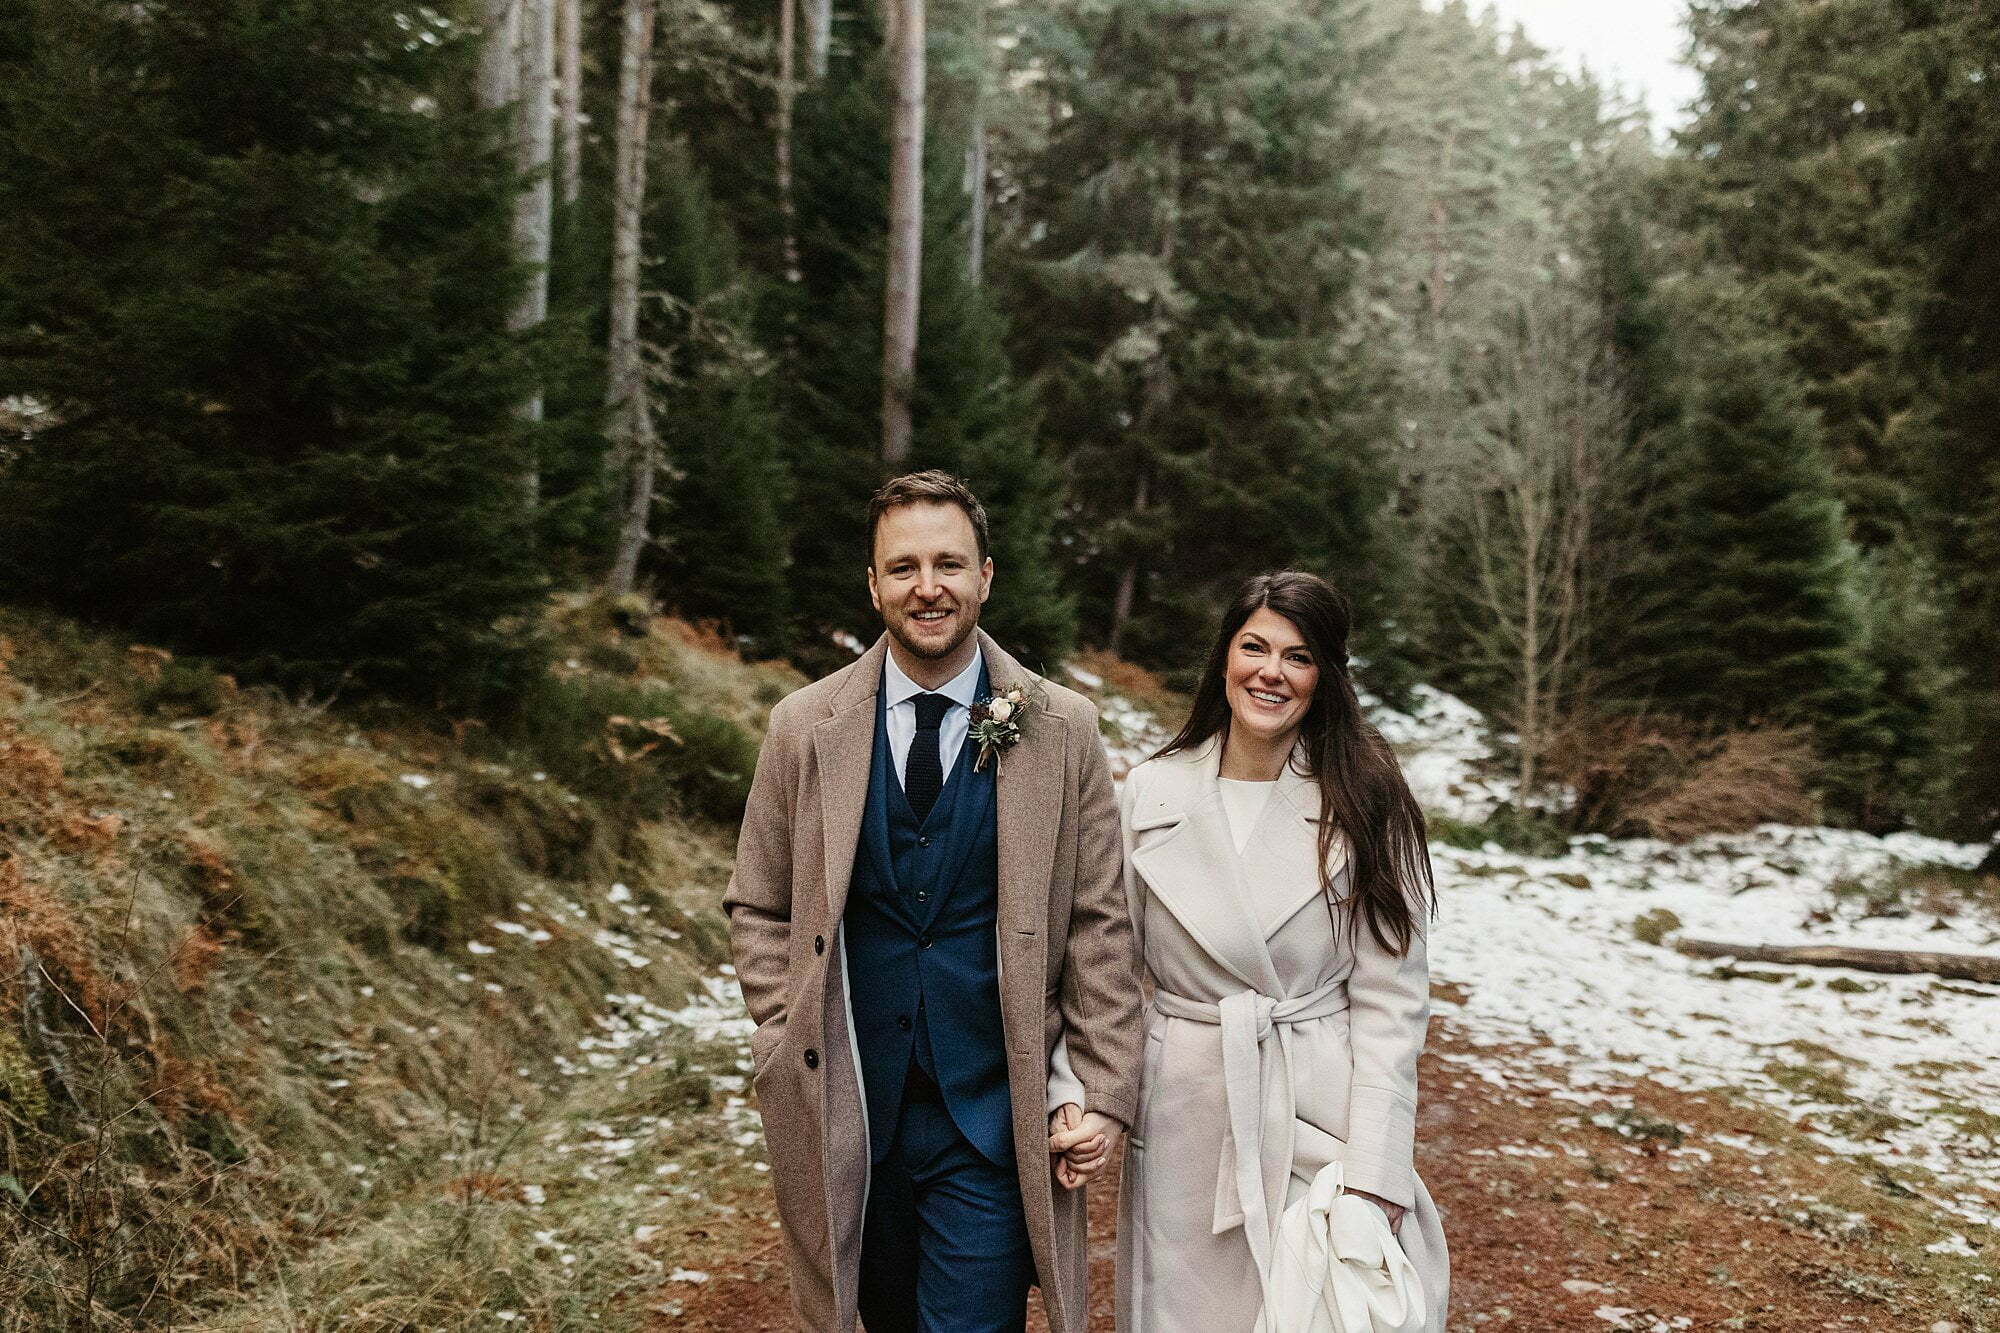 Cairngorms national park snowy tree lined path bride groom walking